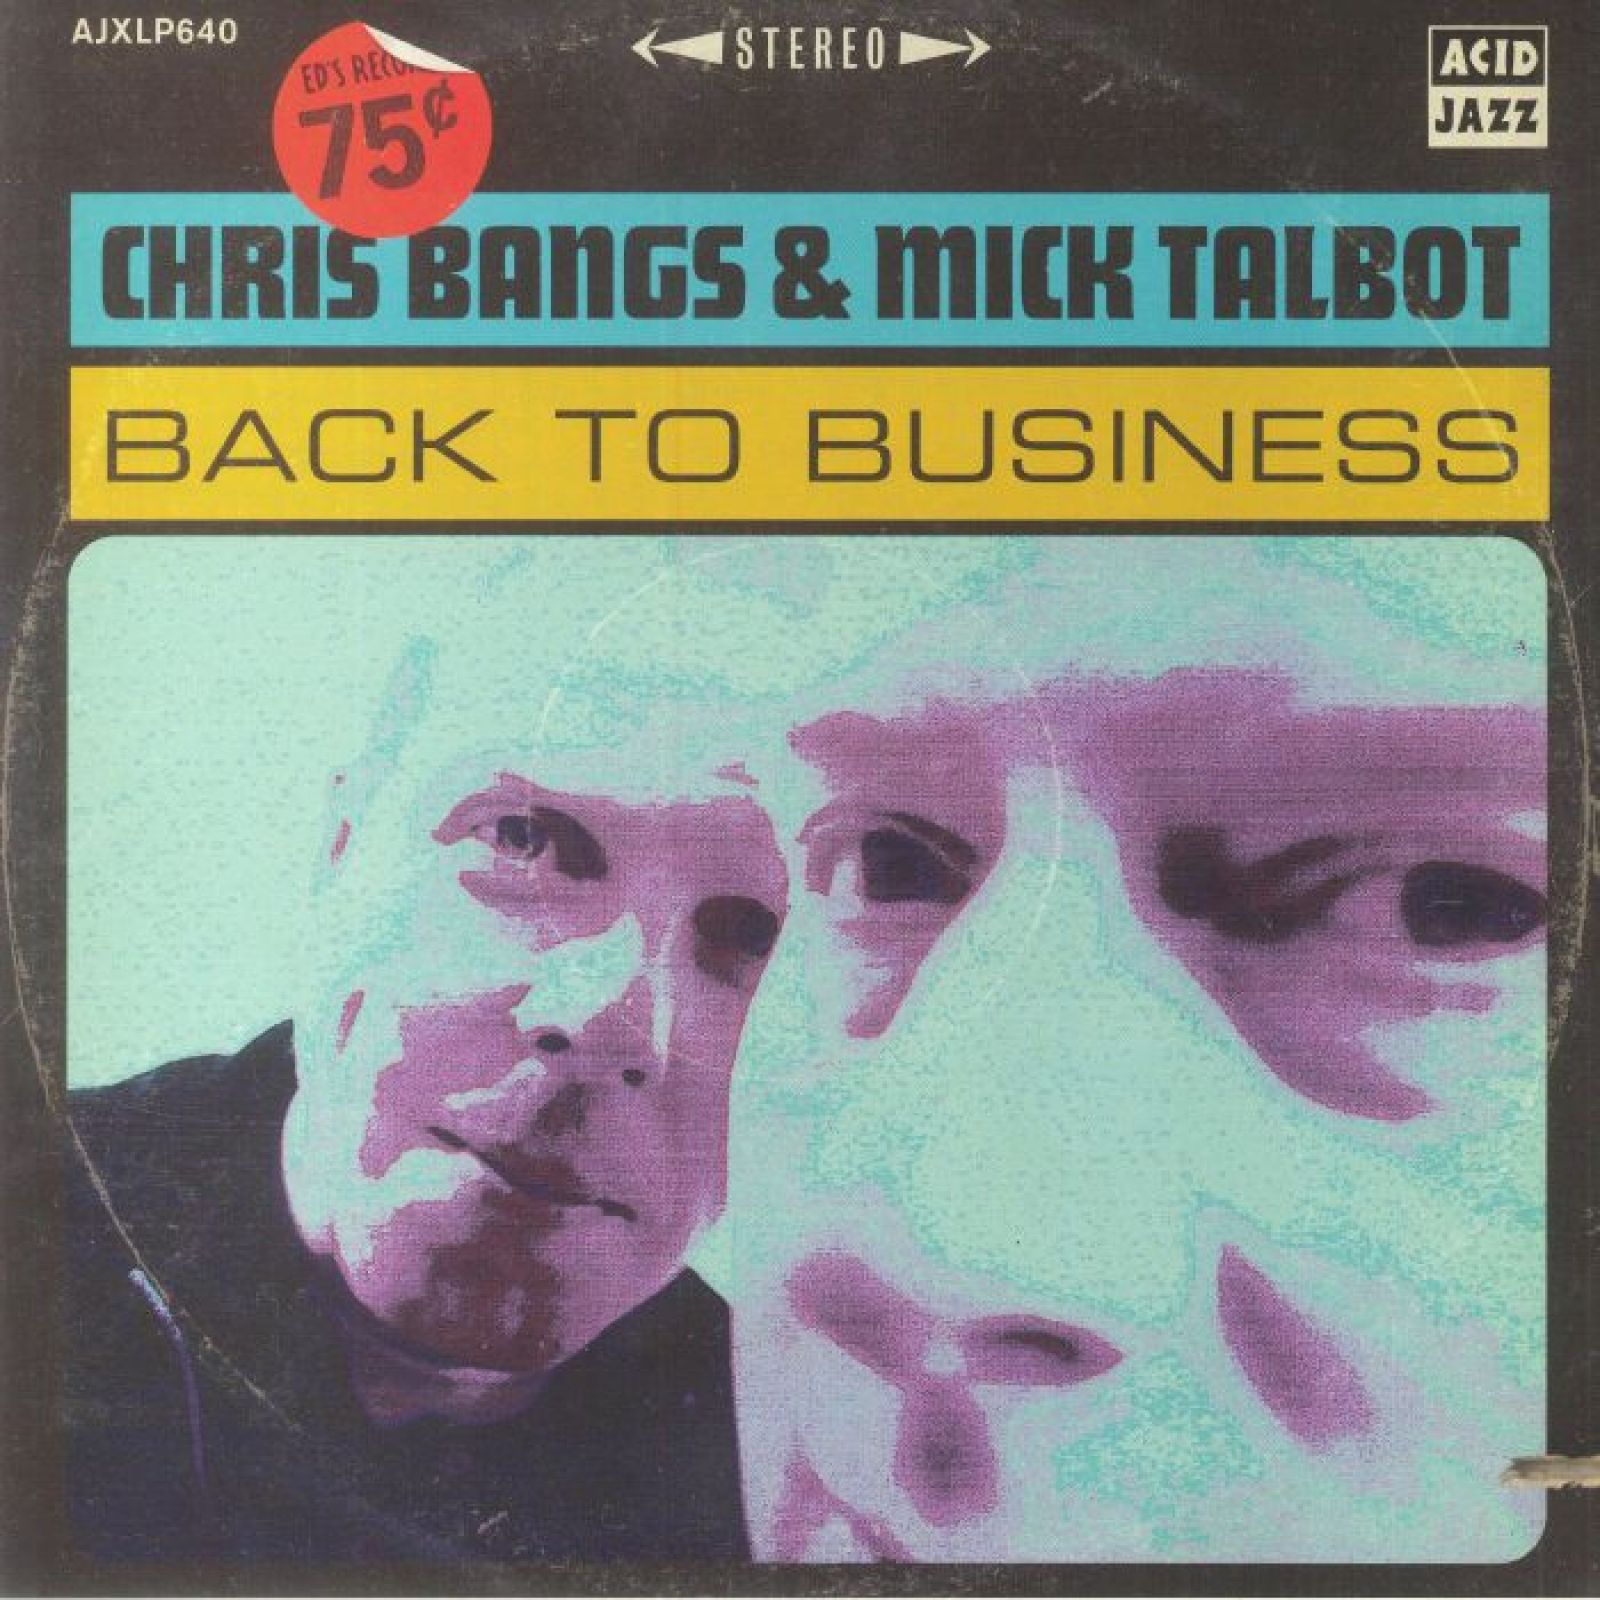 Виниловая пластинка Bangs, Chris; Talbot, Mick, Back To Business (5051083176620) виниловая пластинка botti chris chris botti 0602455165879